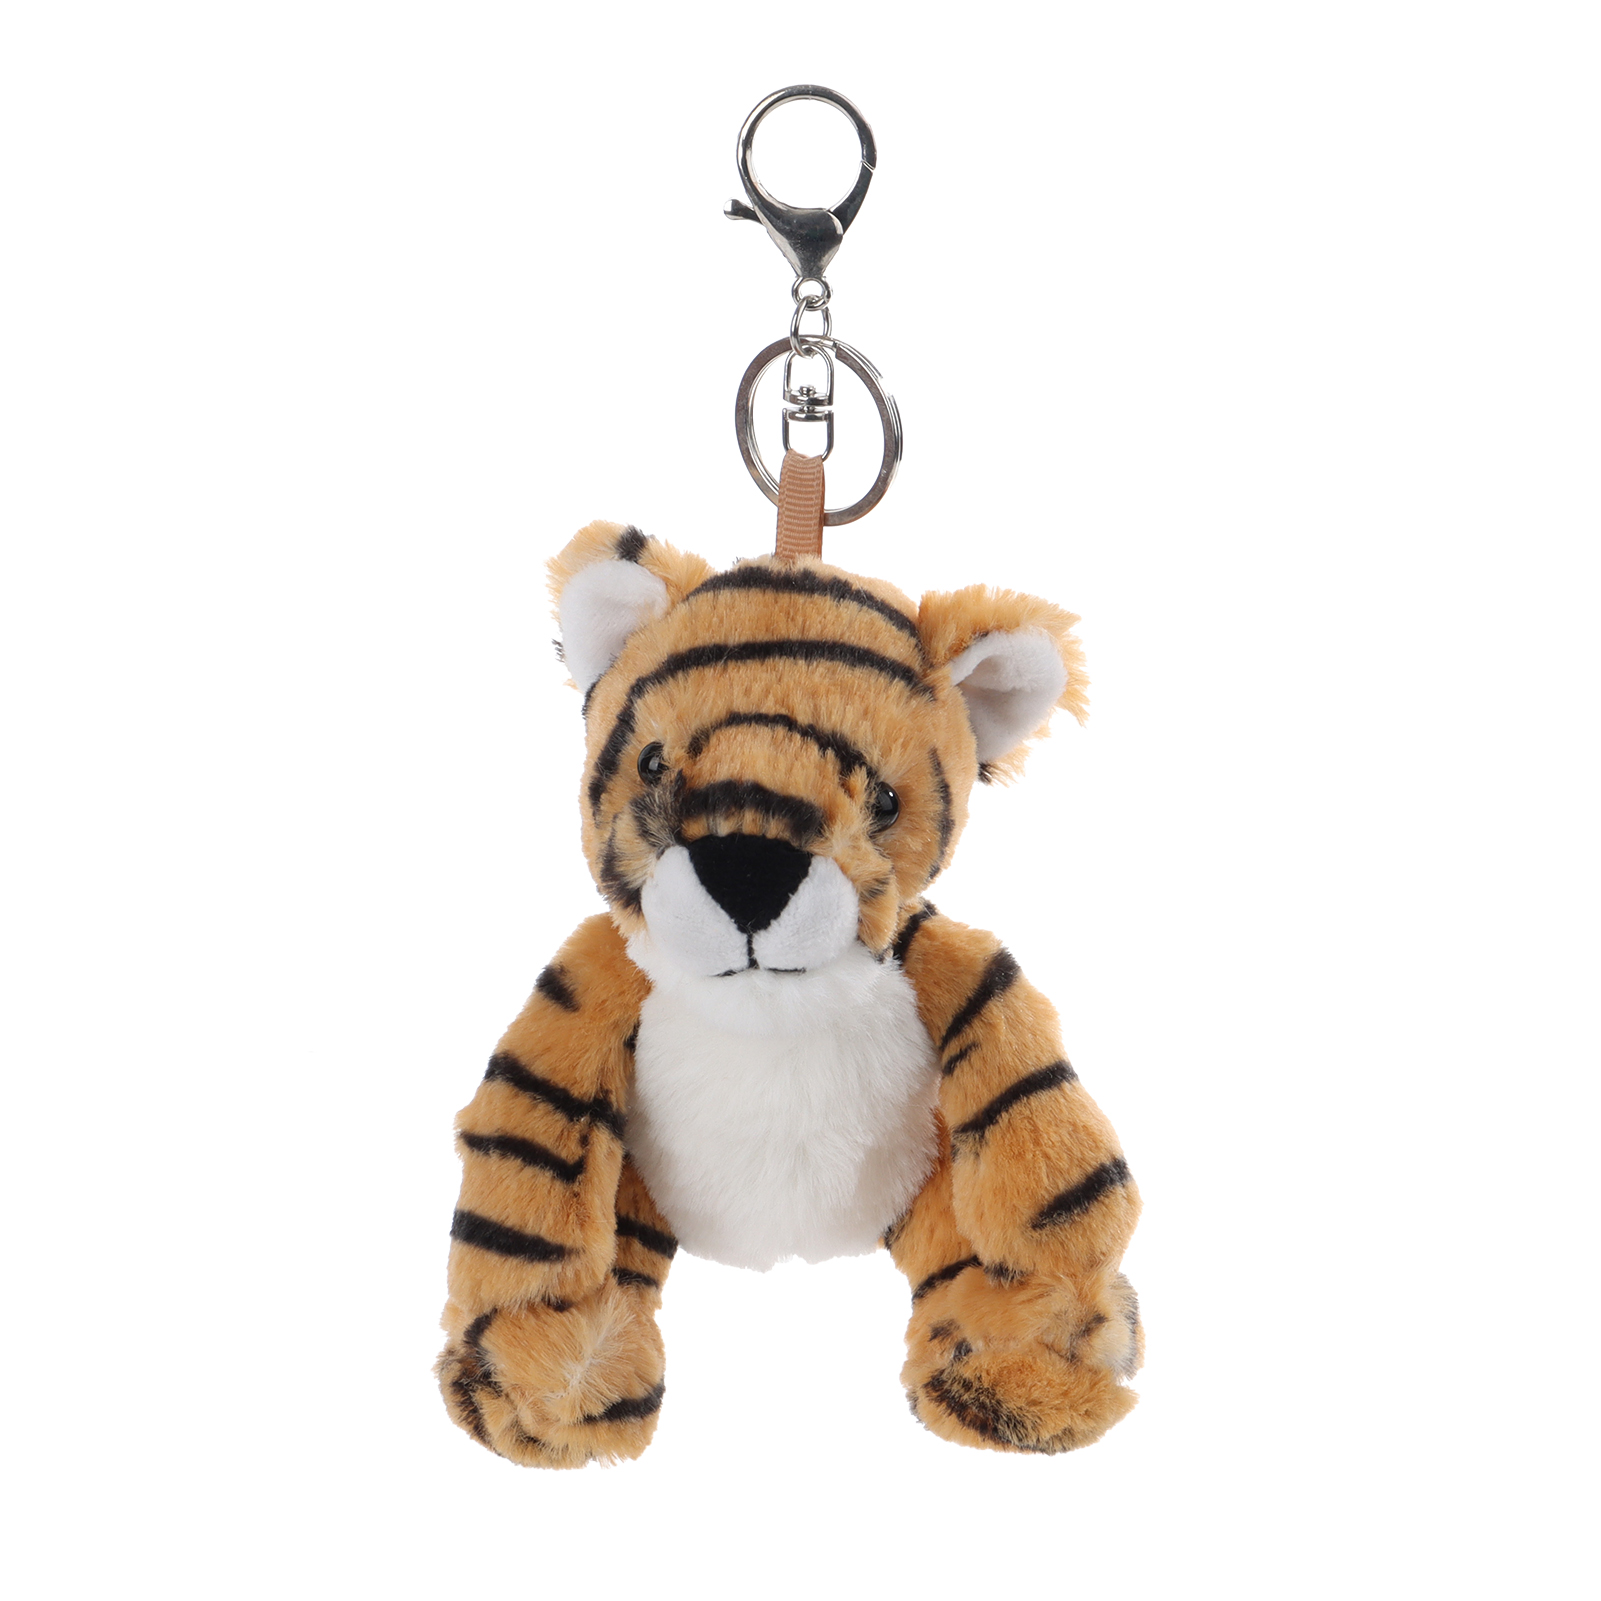 Apricot Lamb Key- Classic Tiger Stuffed Animal Soft Plush Keychain